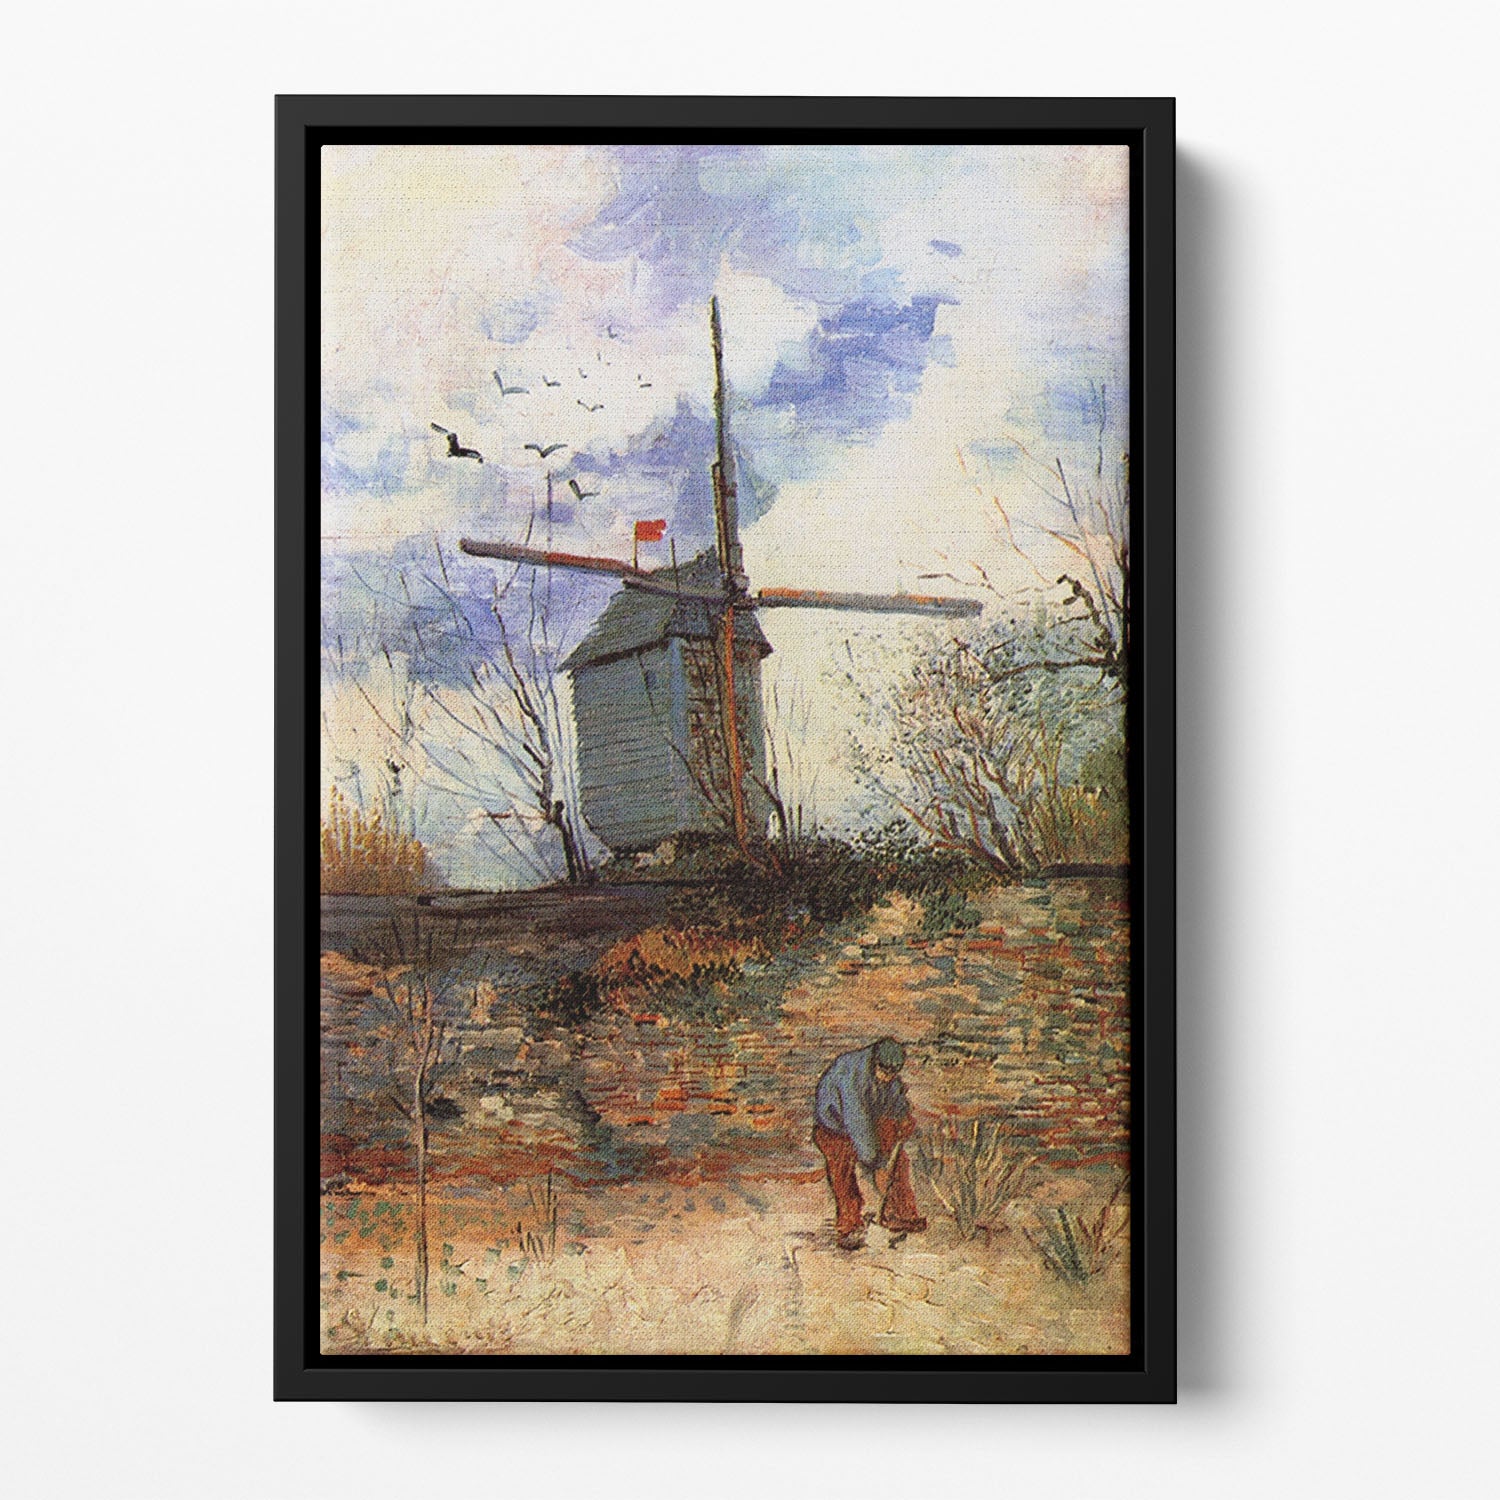 Le Moulin de la Galette 2 by Van Gogh Floating Framed Canvas